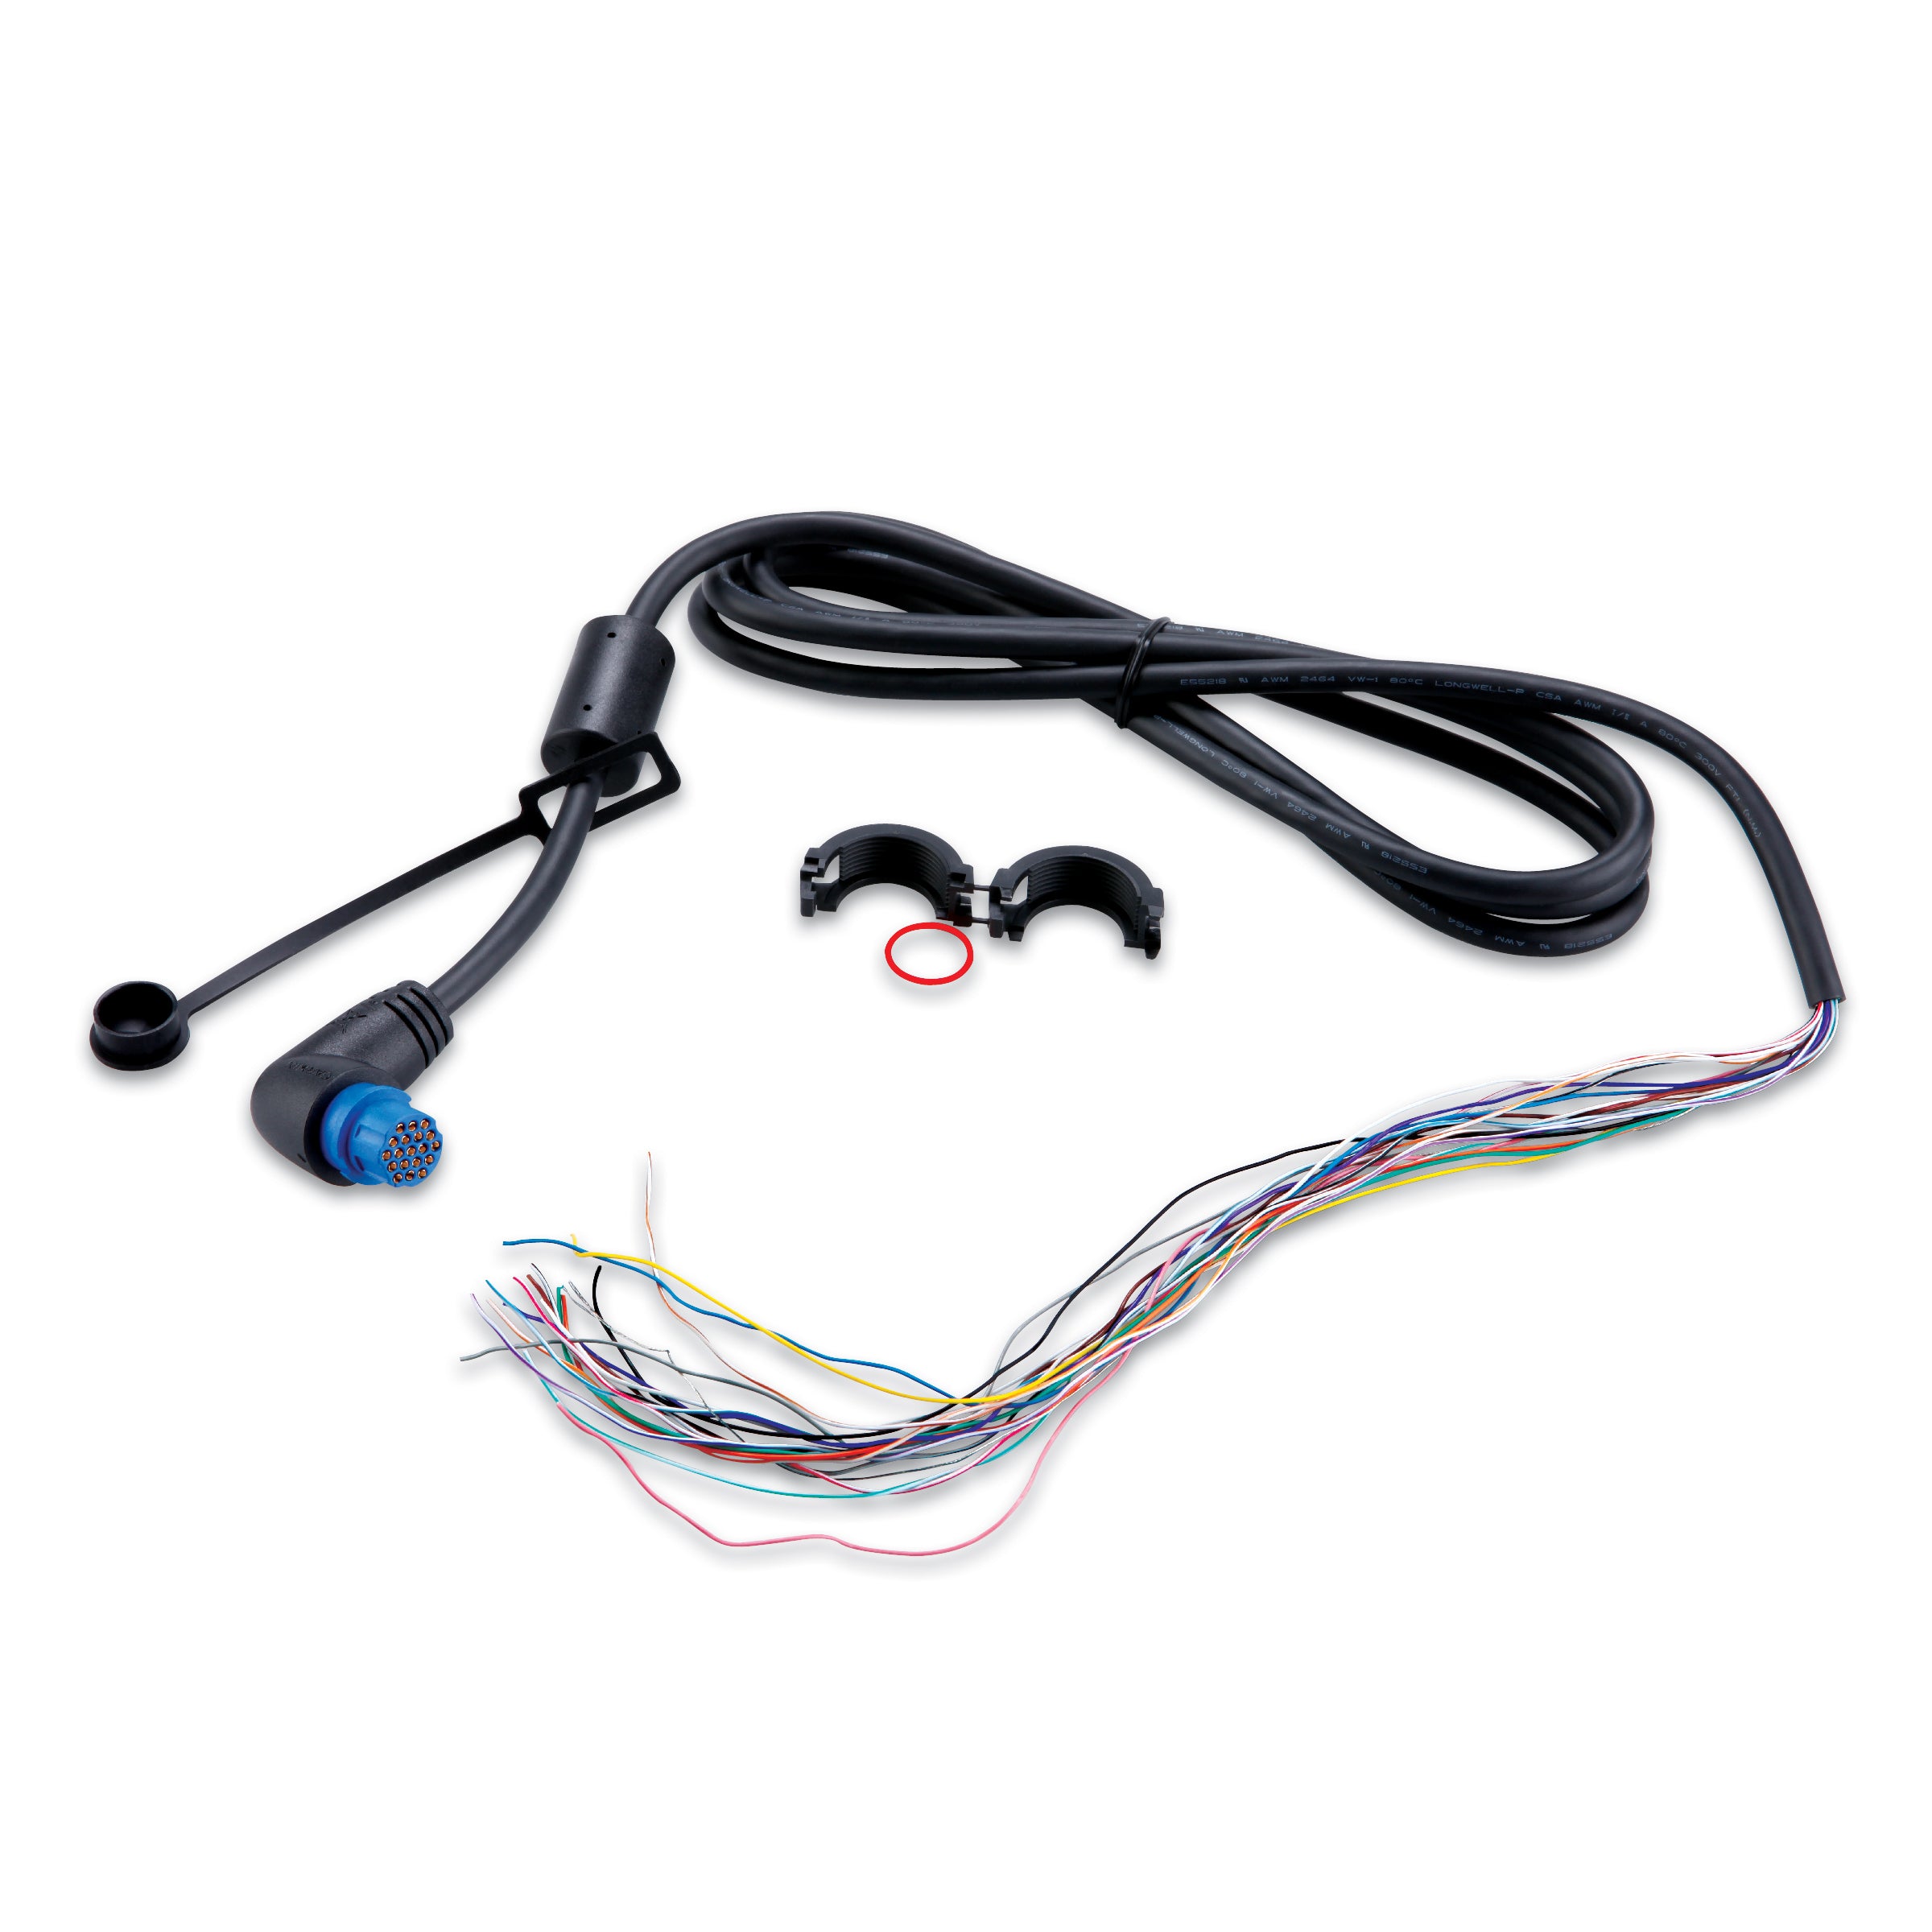 Garmin NMEA 0183 cable with grommet, right-angled (6 feet)